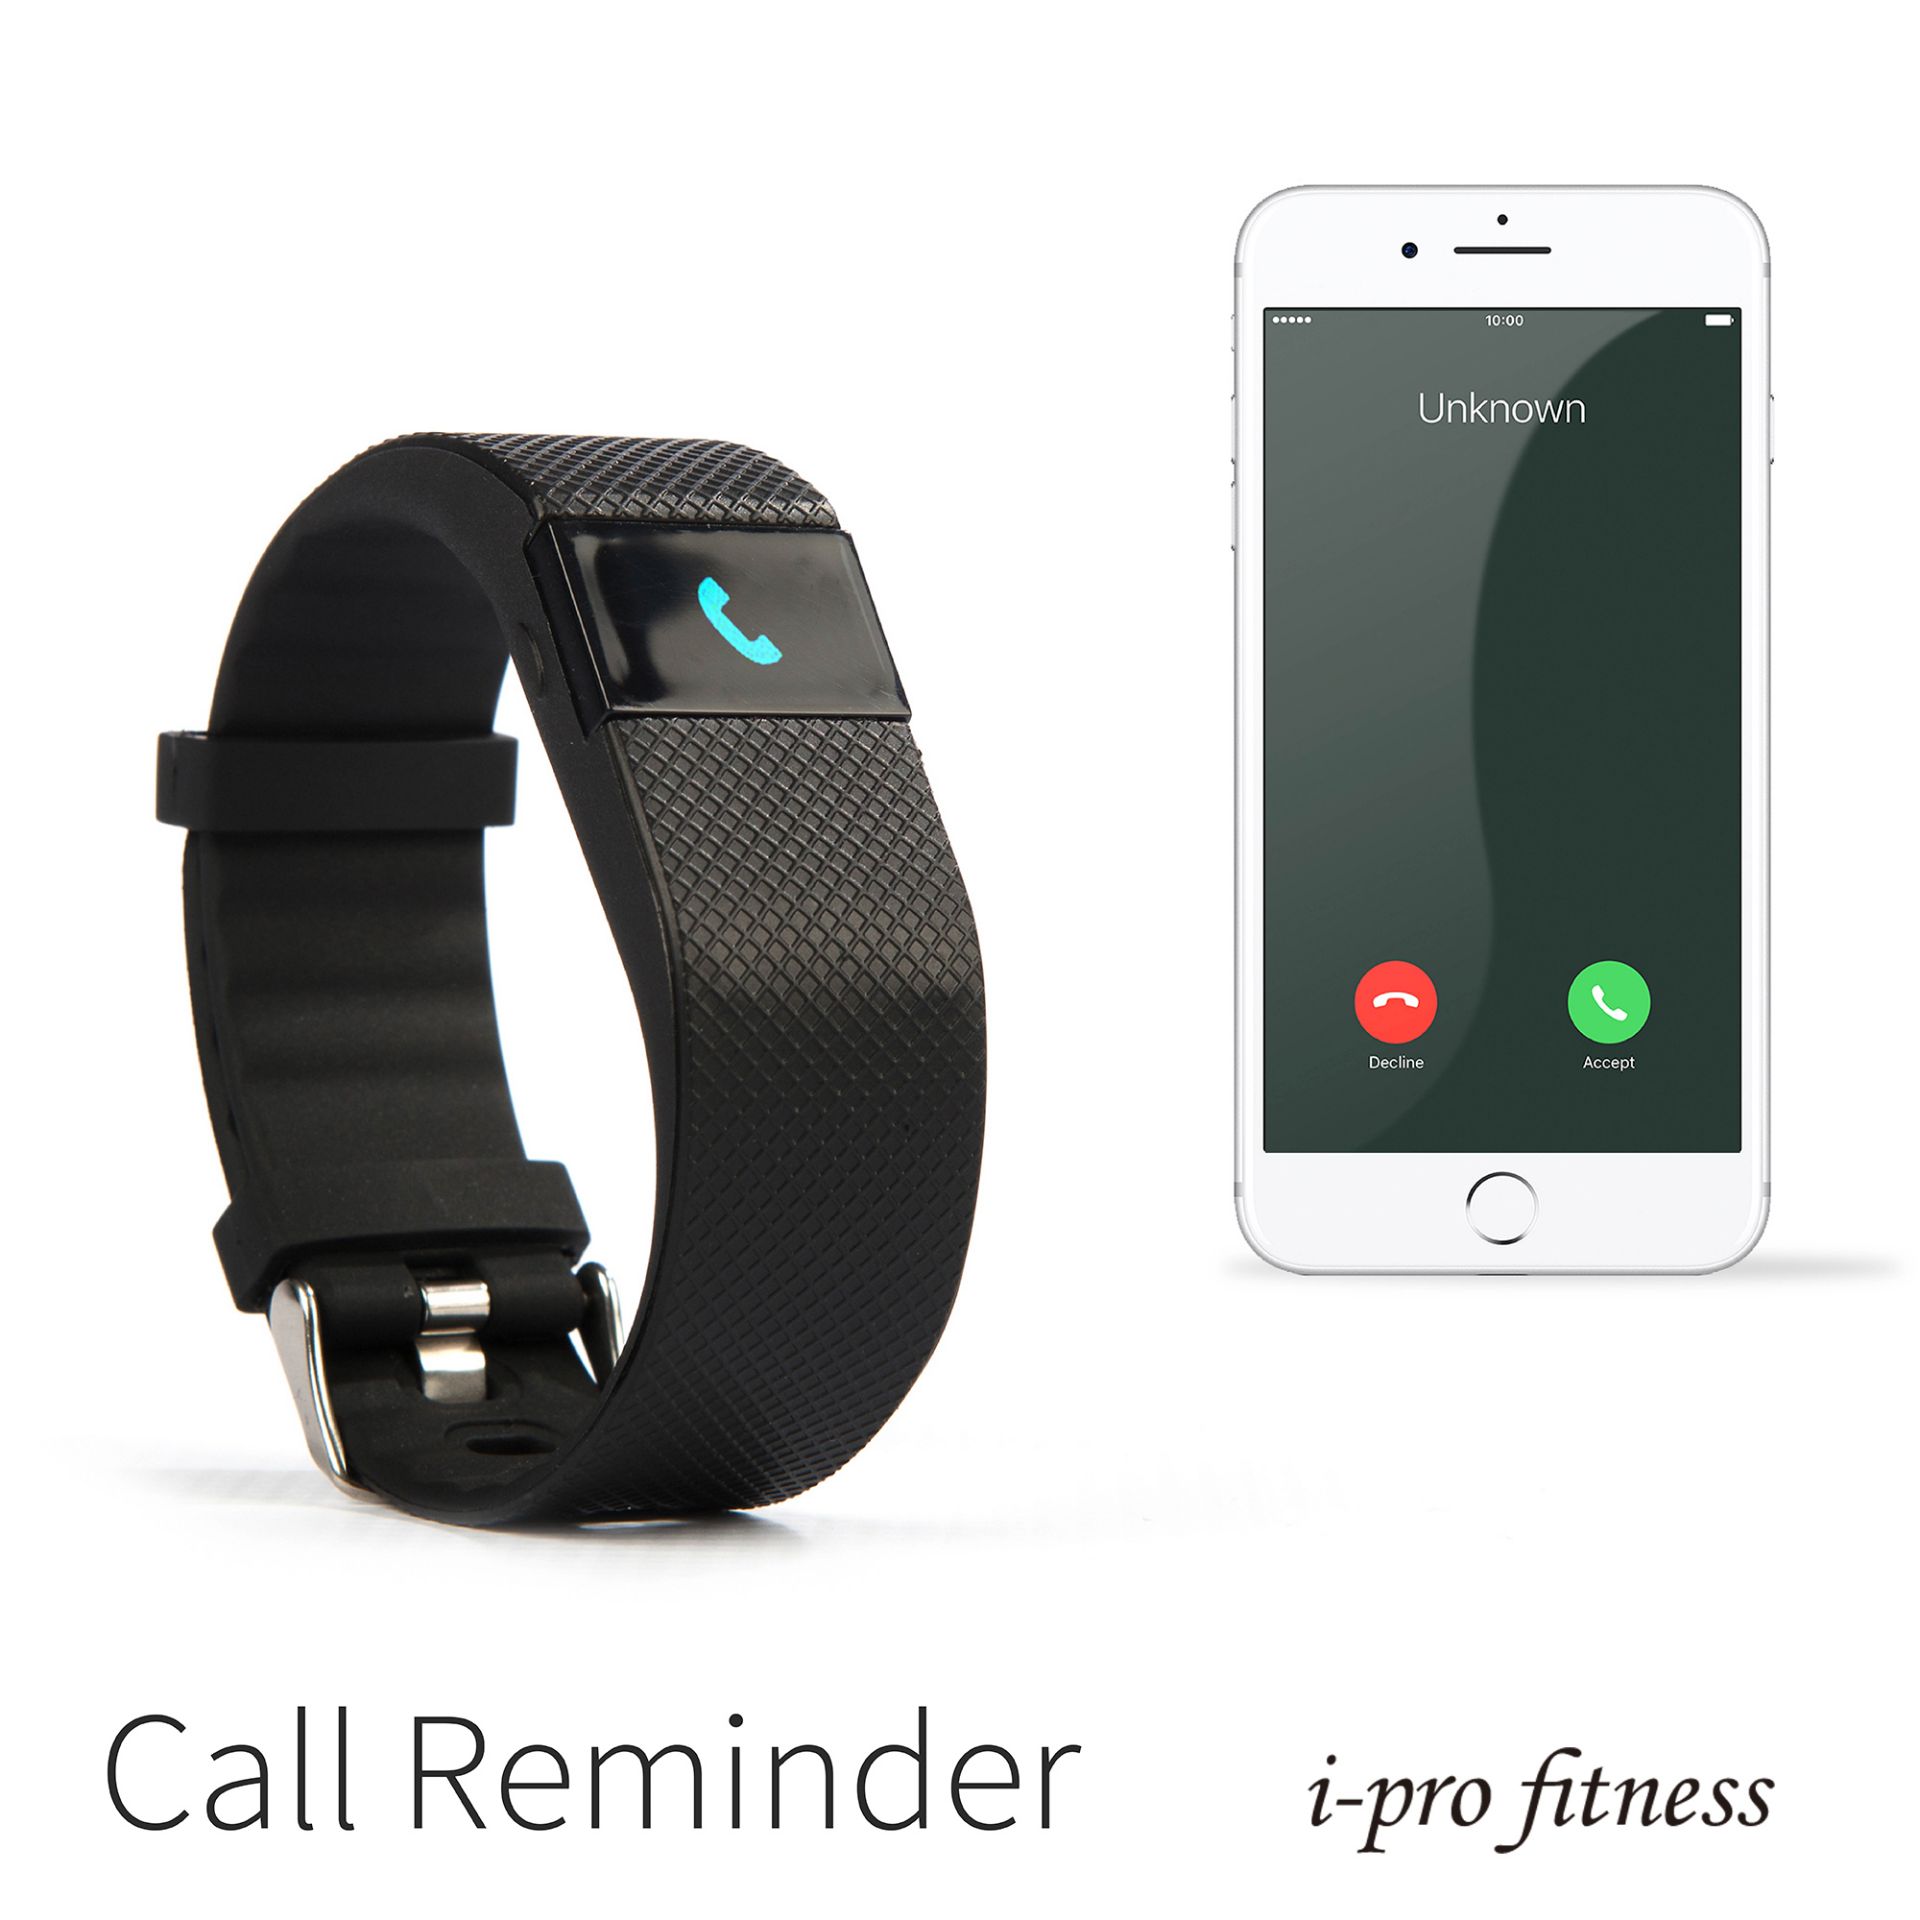 10x Fitness Tracker i-pro fitness, Bluetooth 4.0 Sports Smart Bracelet, Heart Rate Monitor - Image 2 of 8